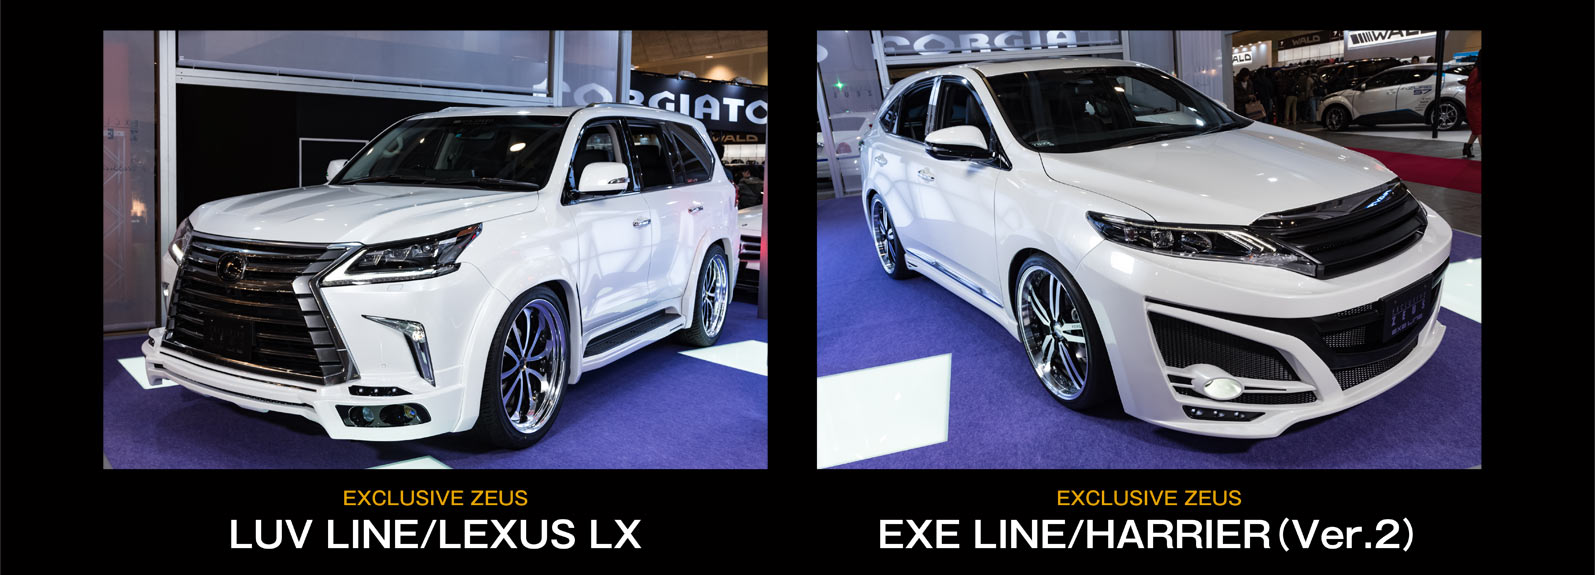 LUV LINE/LEXUS LX  EXE LINE/HARRIER(Ver.2)